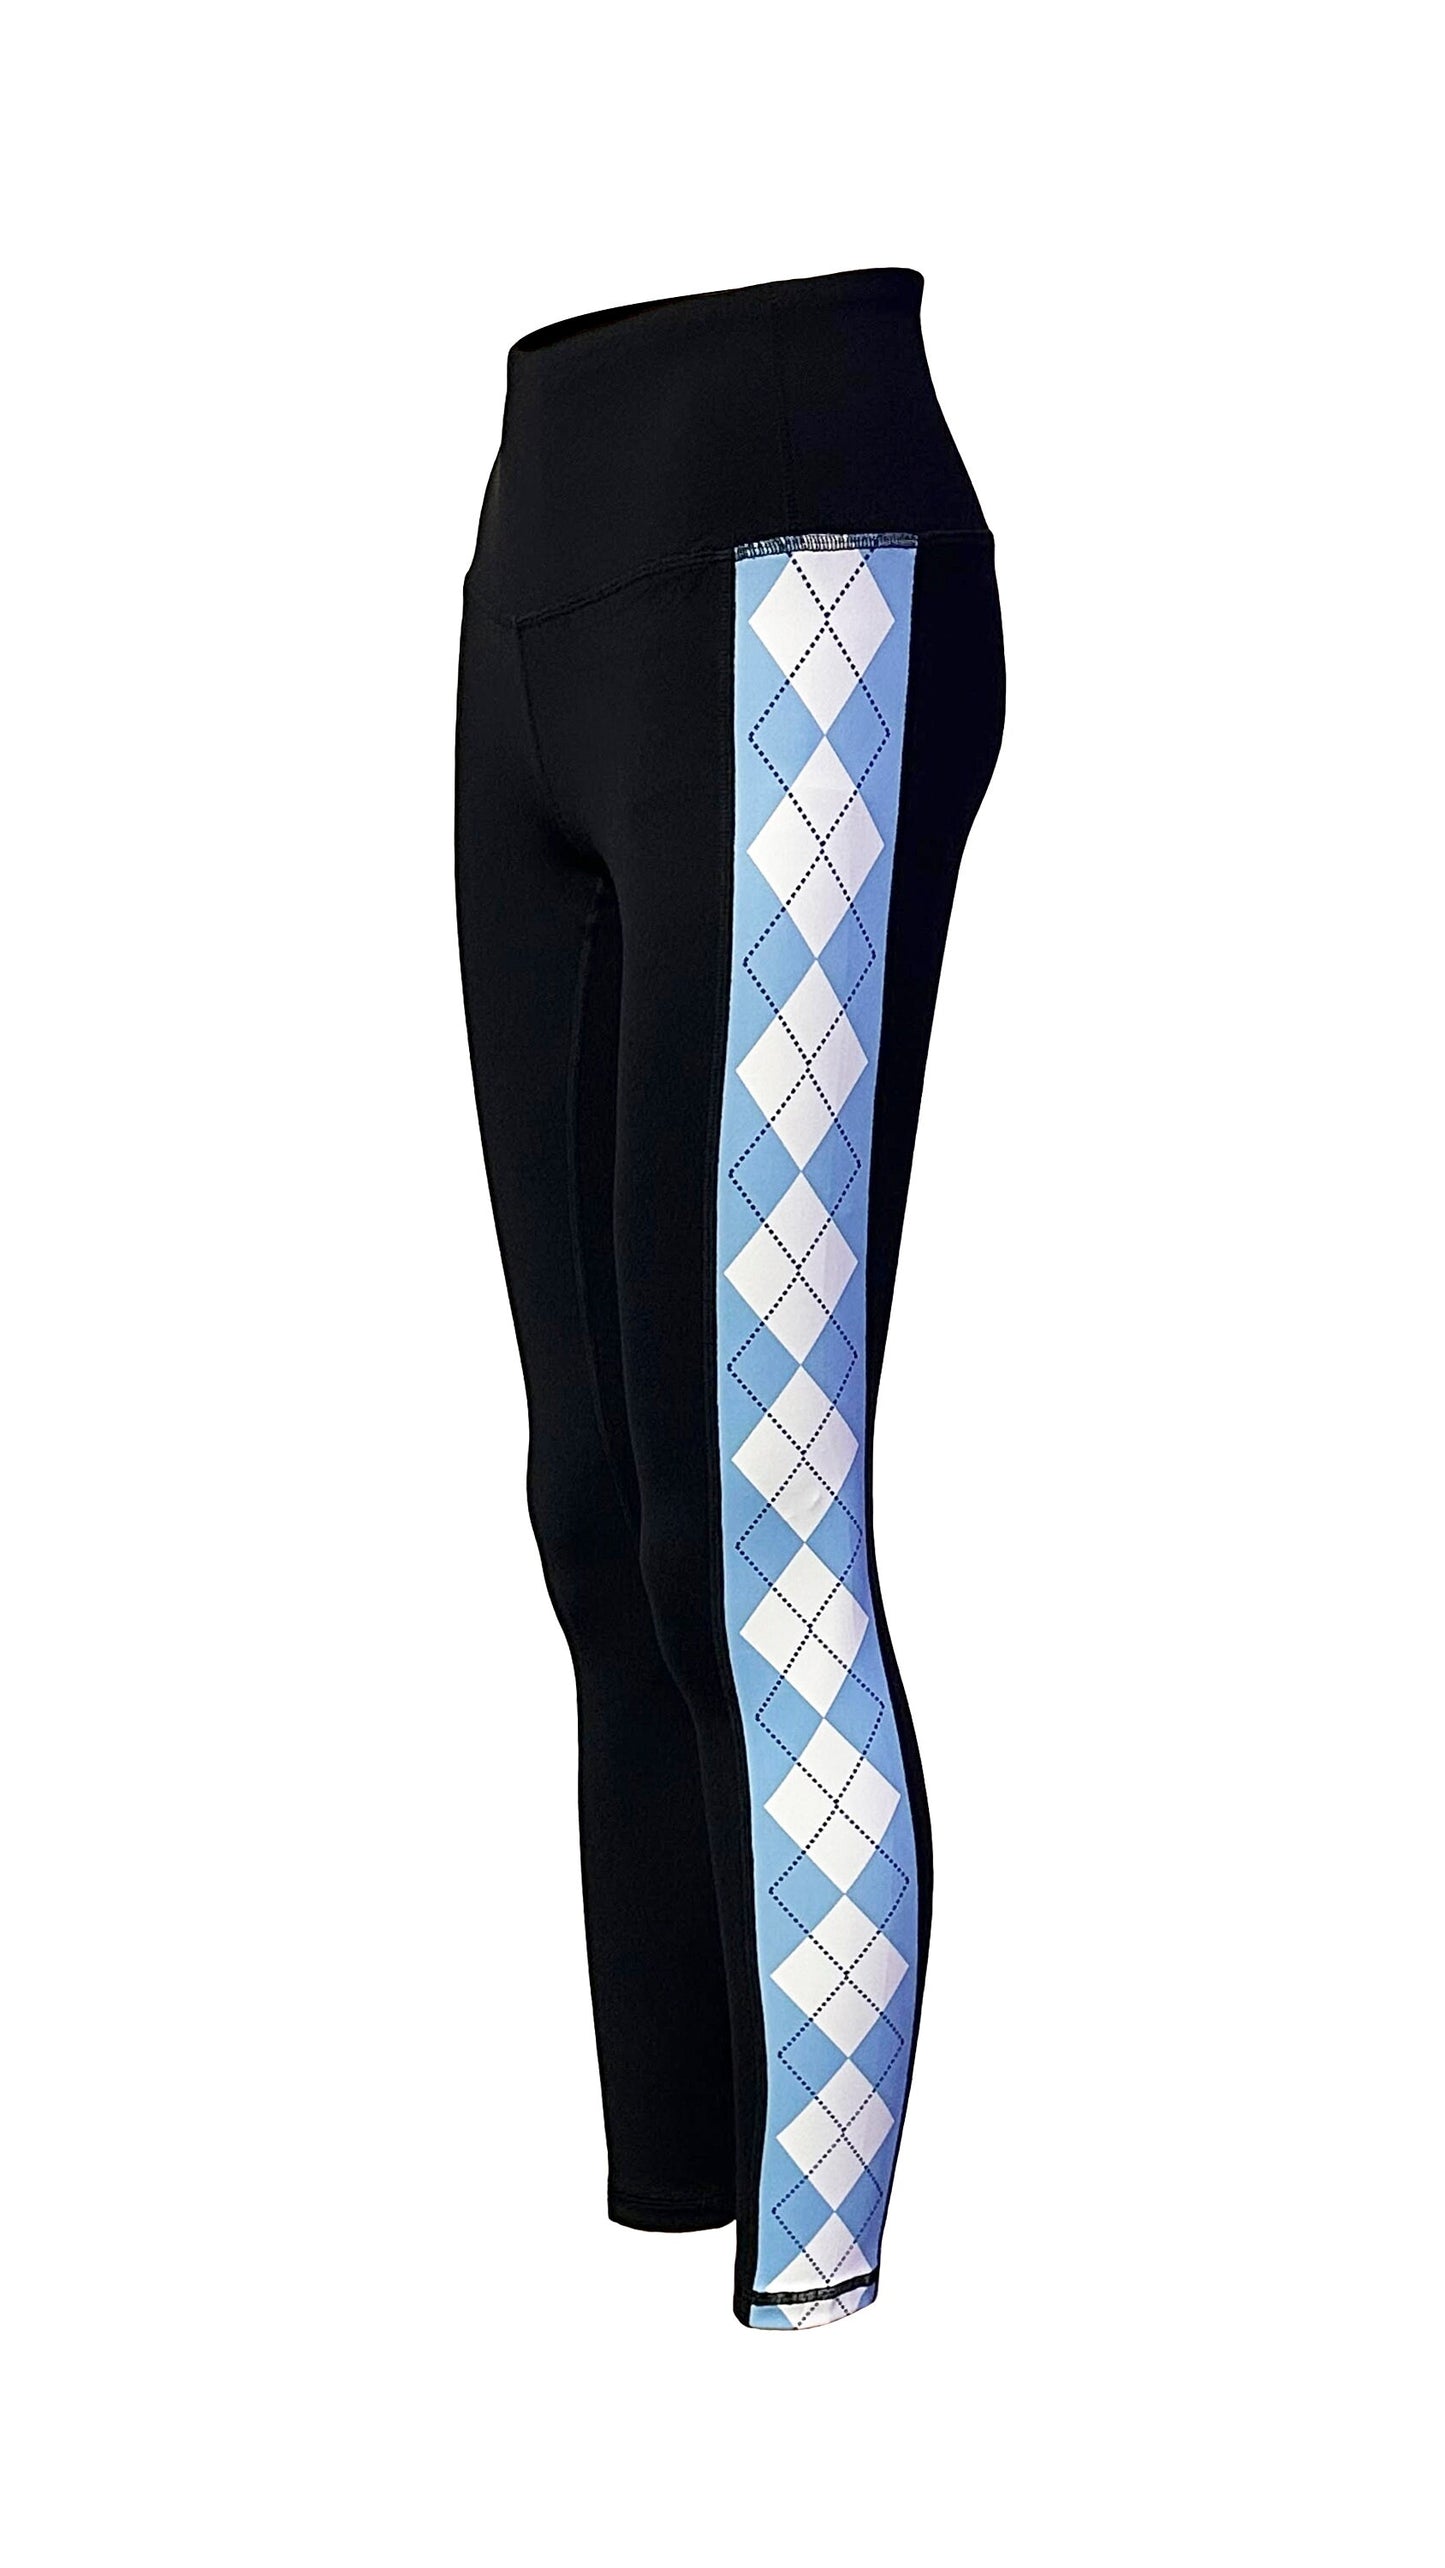 Blue and White Argyle Side Stripe Pattern Yoga Pant Leggings